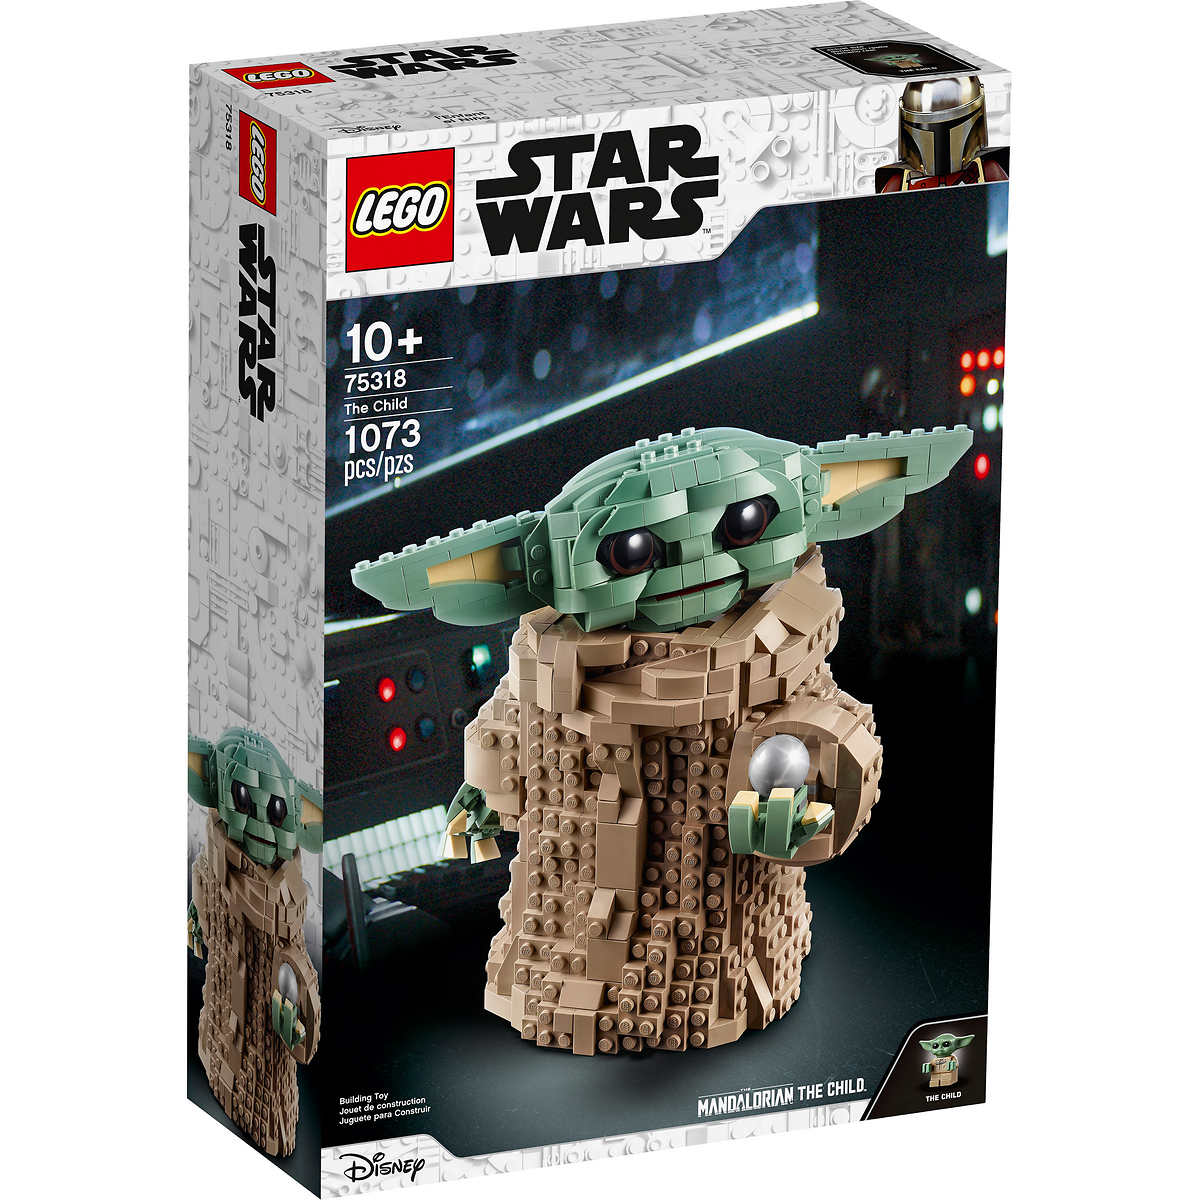 Lego Star Wars The Child 75318 Costco, Lego Star Wars Shower Curtain